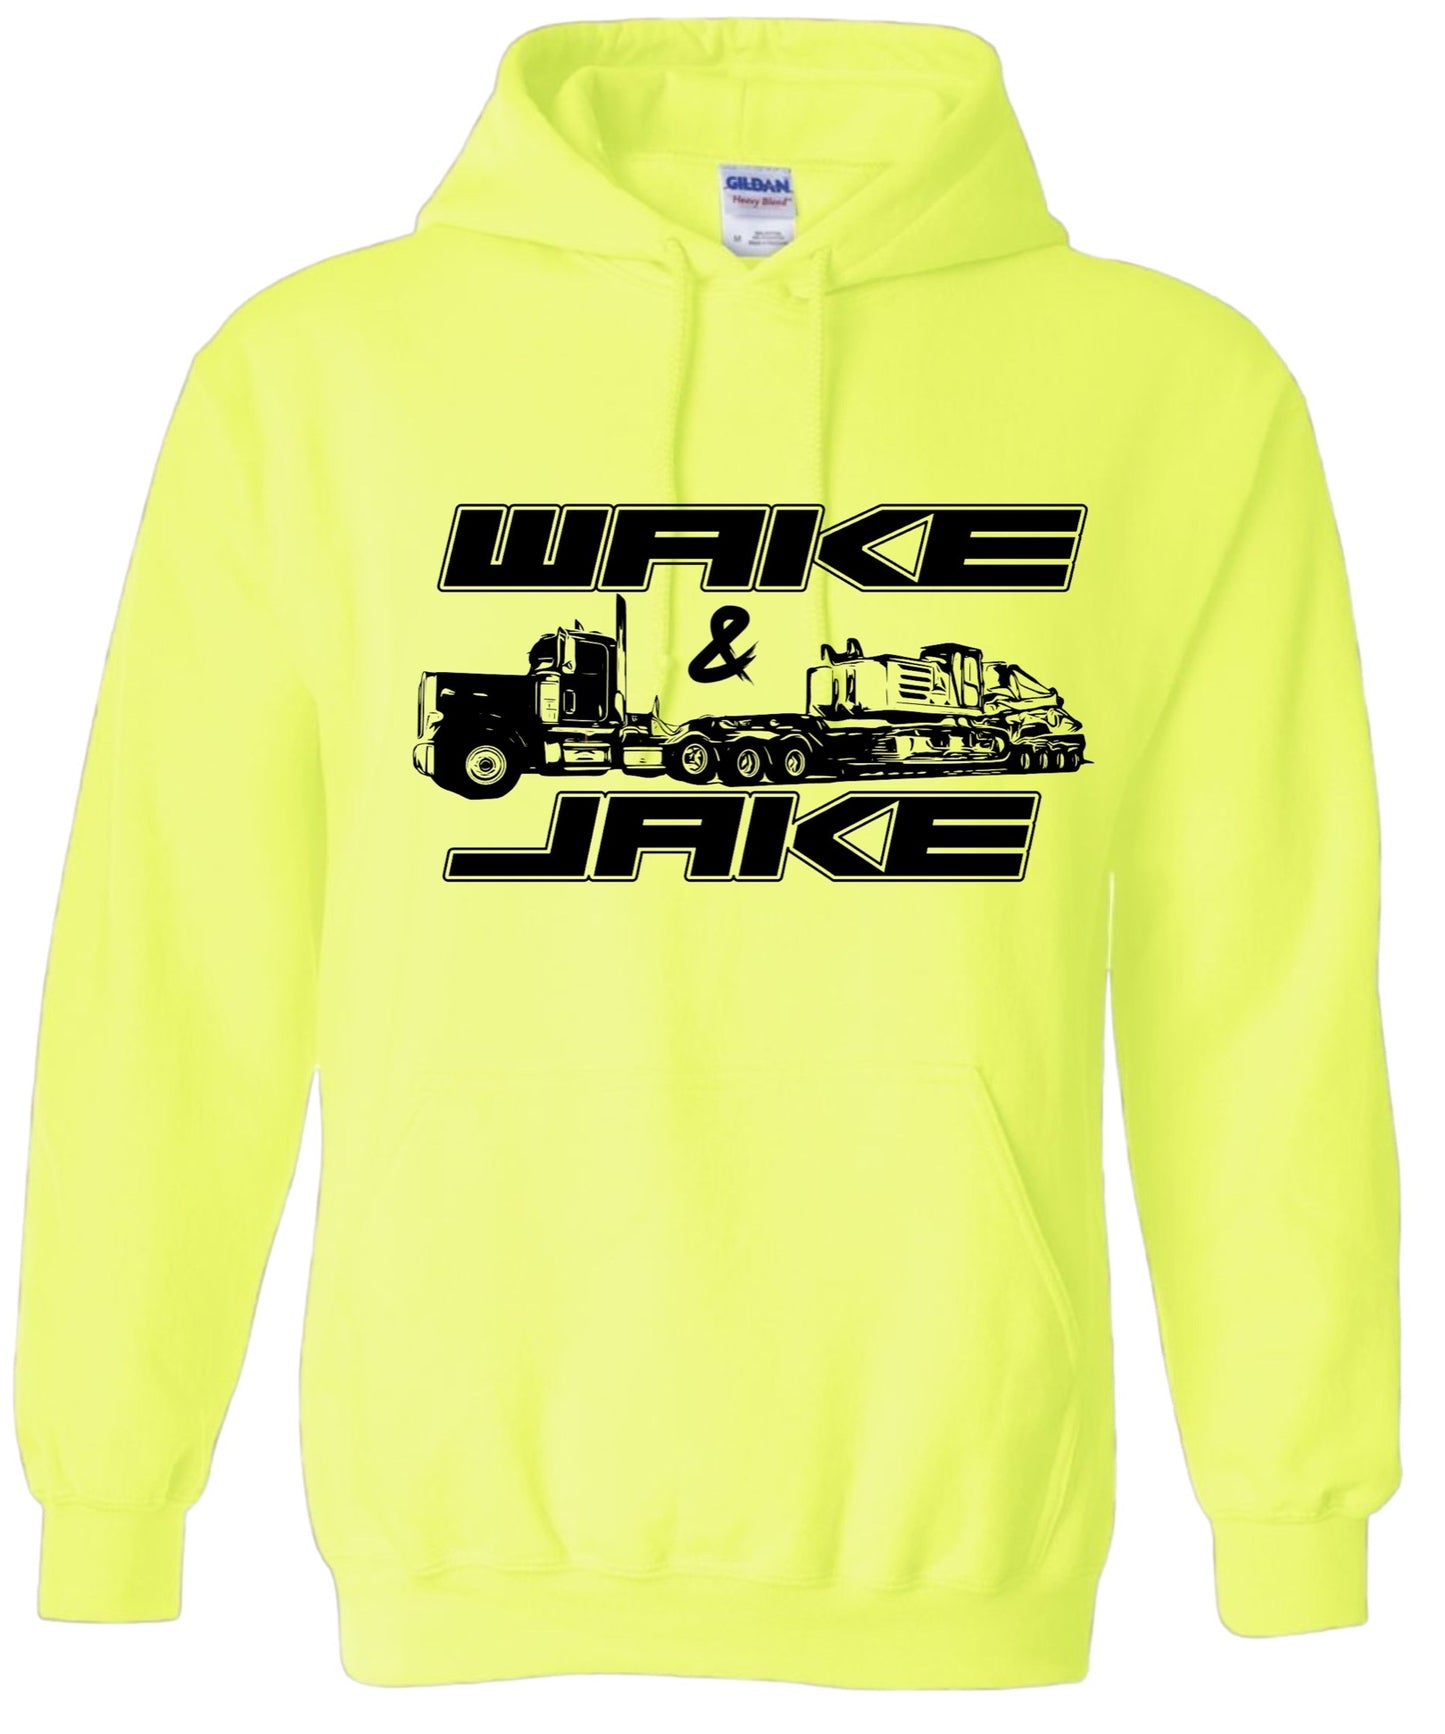 Wake & Jake Hoodie